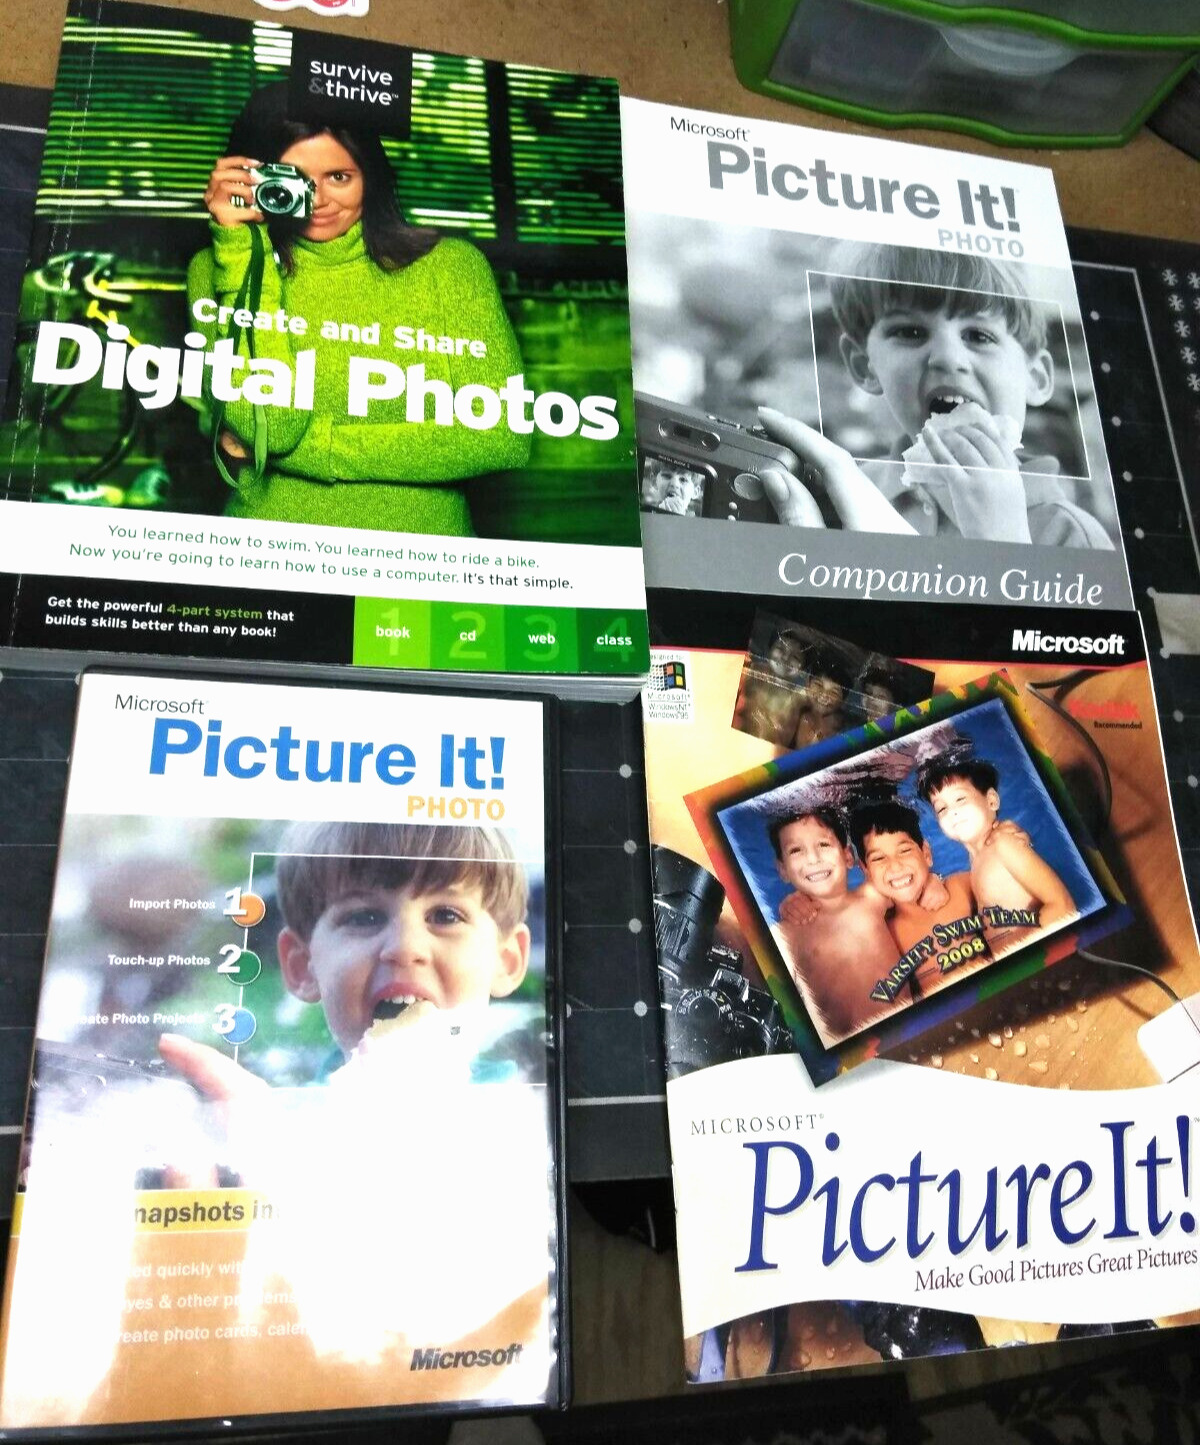 Microsoft Picture It VERSION 7.0 Windows / BONUS GATEWAY BOOK - DIGITAL PHOTOS